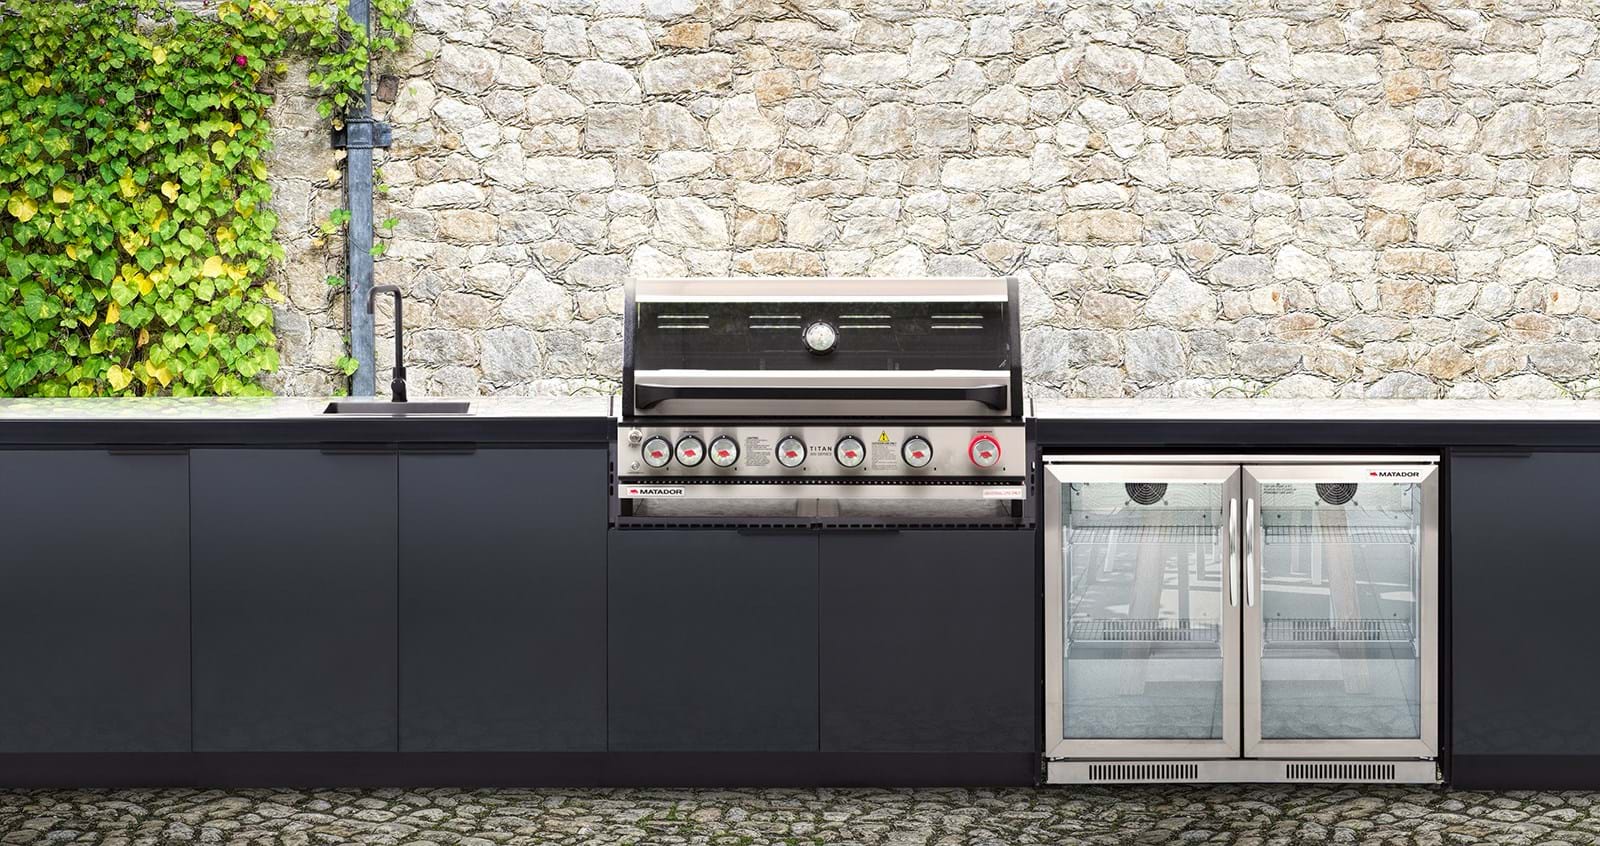 Alfresco Modular Outdoor Kitchen   DIY Ideas & Inspiration ...